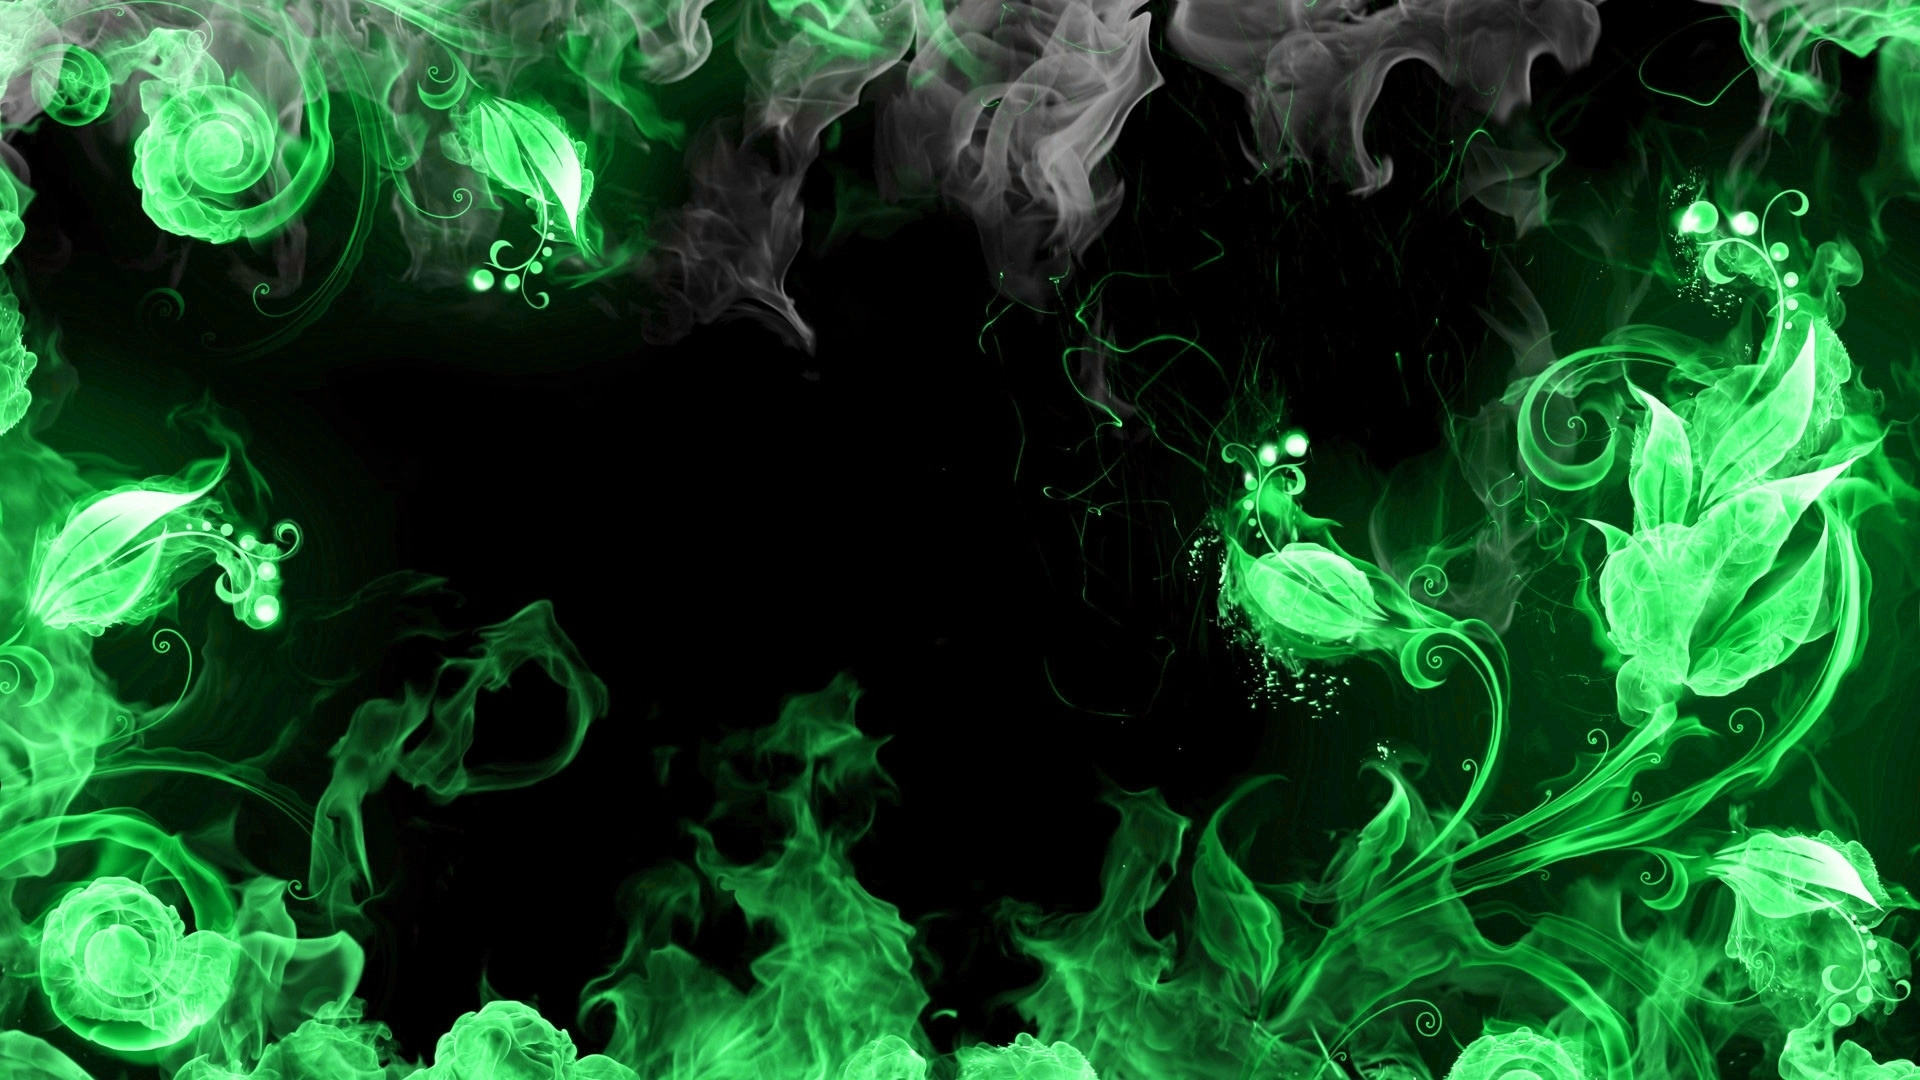 Green Smoke Free Download Image HD Desktop Wallpaper, Instagram ...